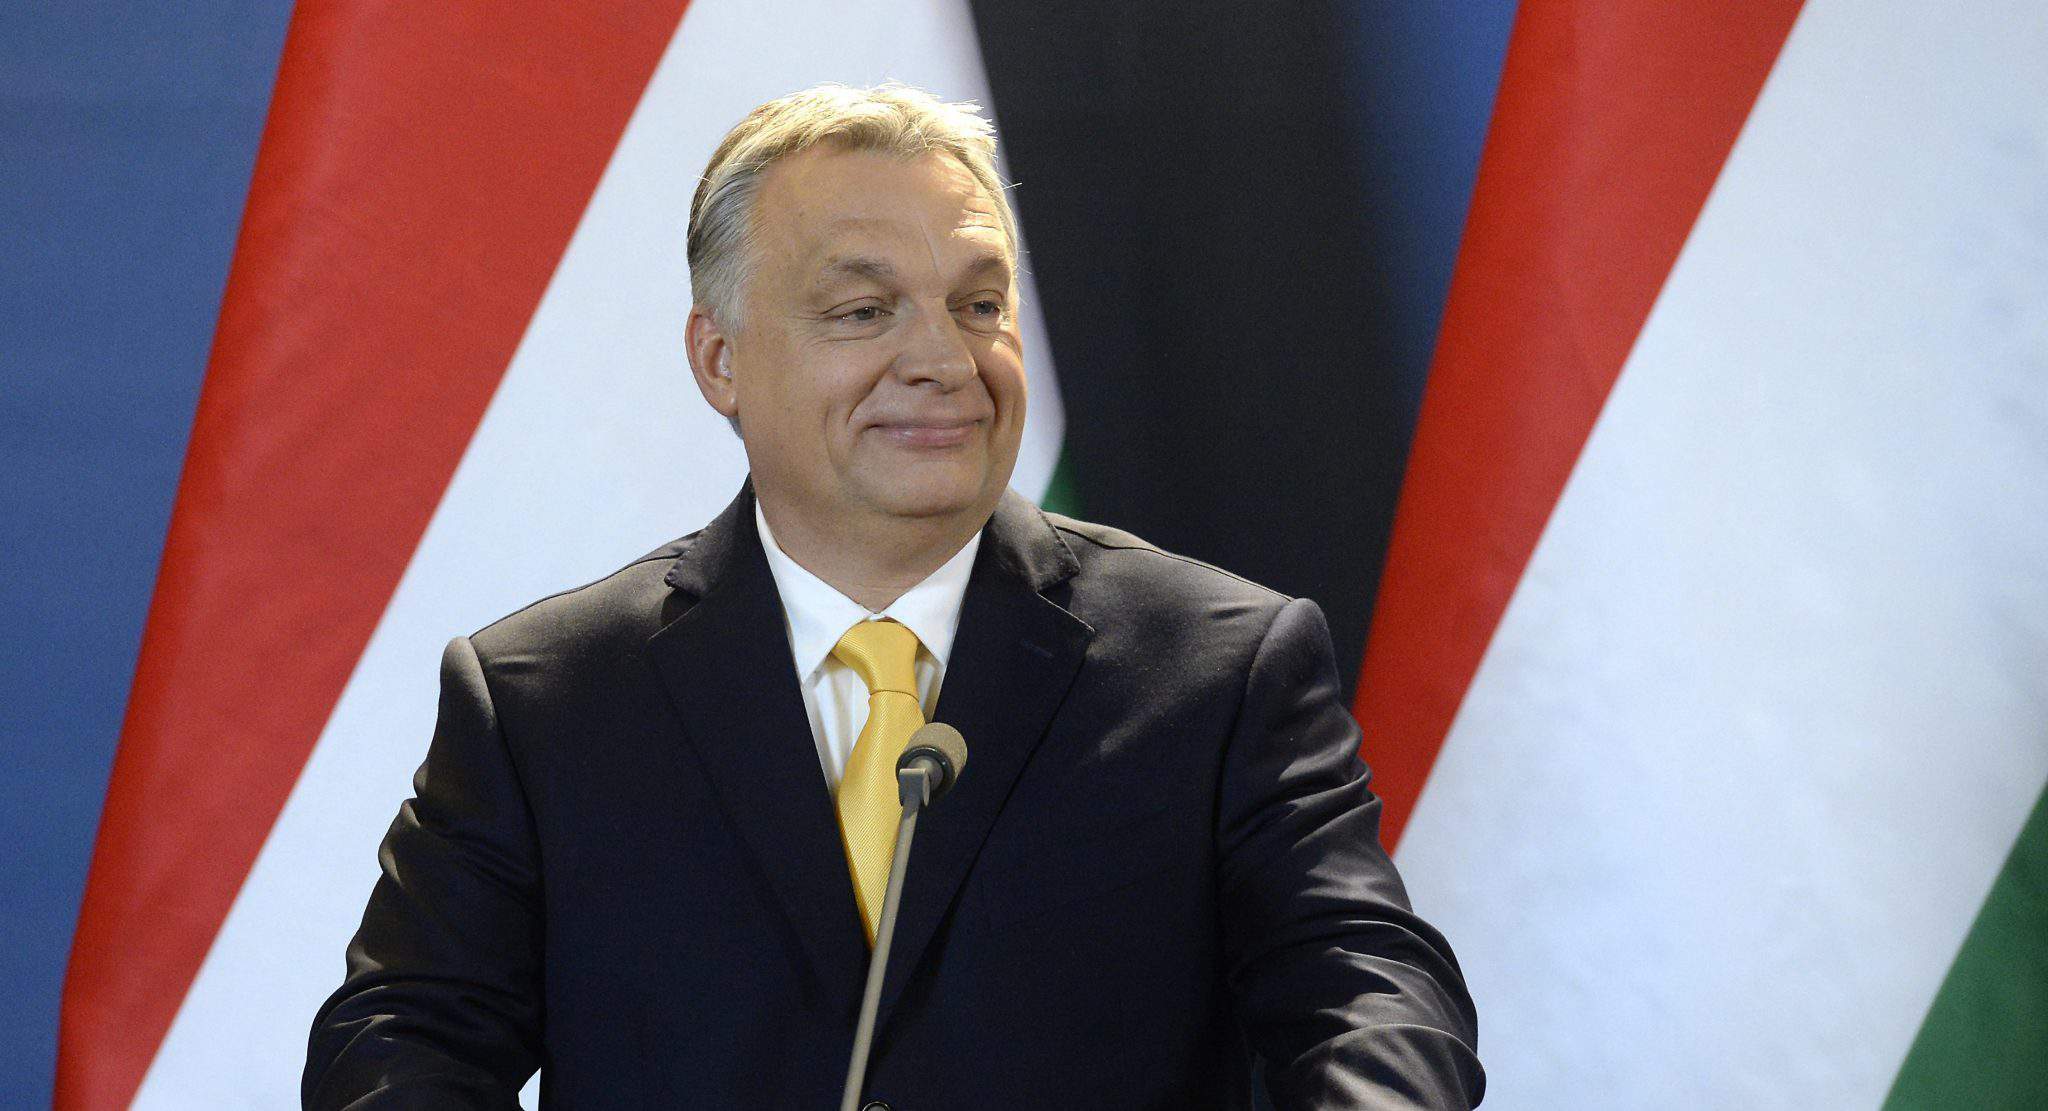 Alegerile Fidesz Viktor Orbán 2018